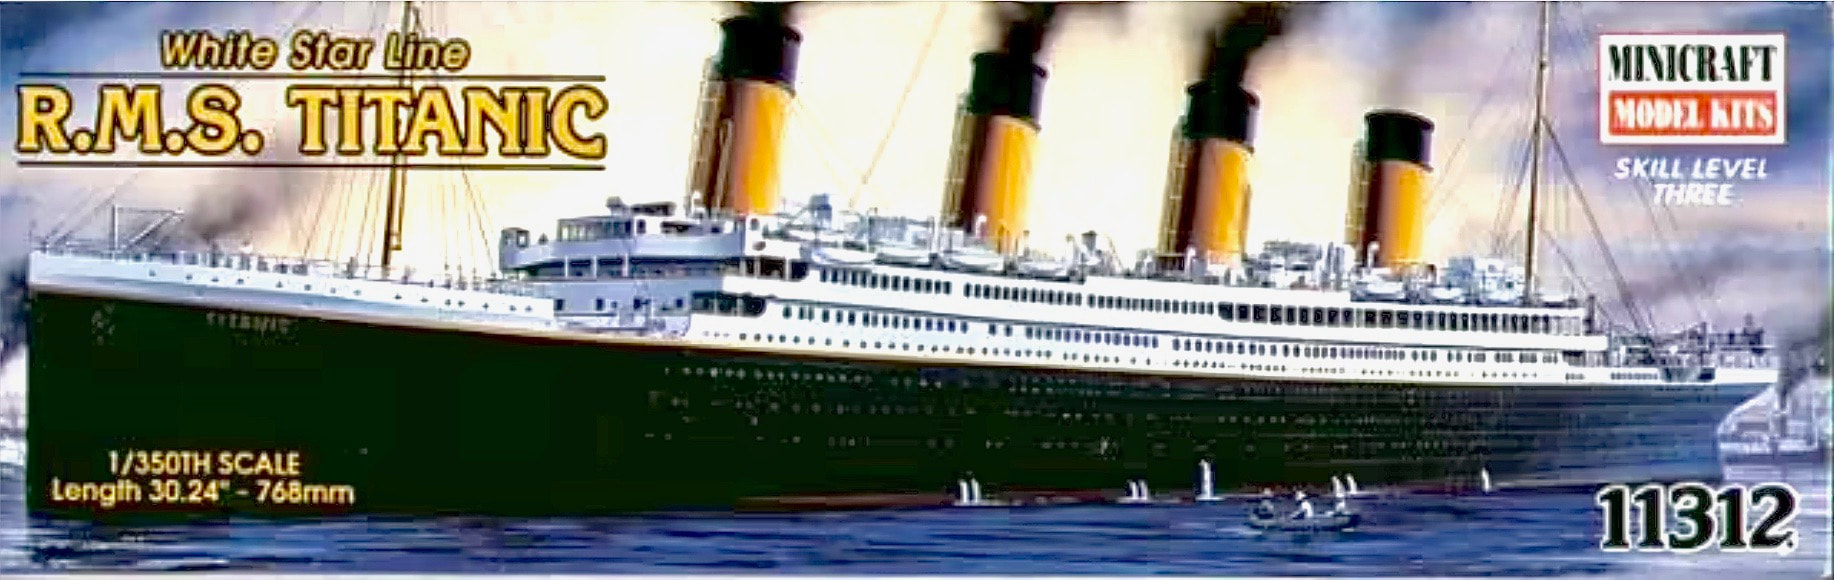 RMS Titanic Ship Brass Display Plaque Minicraft Revell Academy 1/350 1/700 1/200 